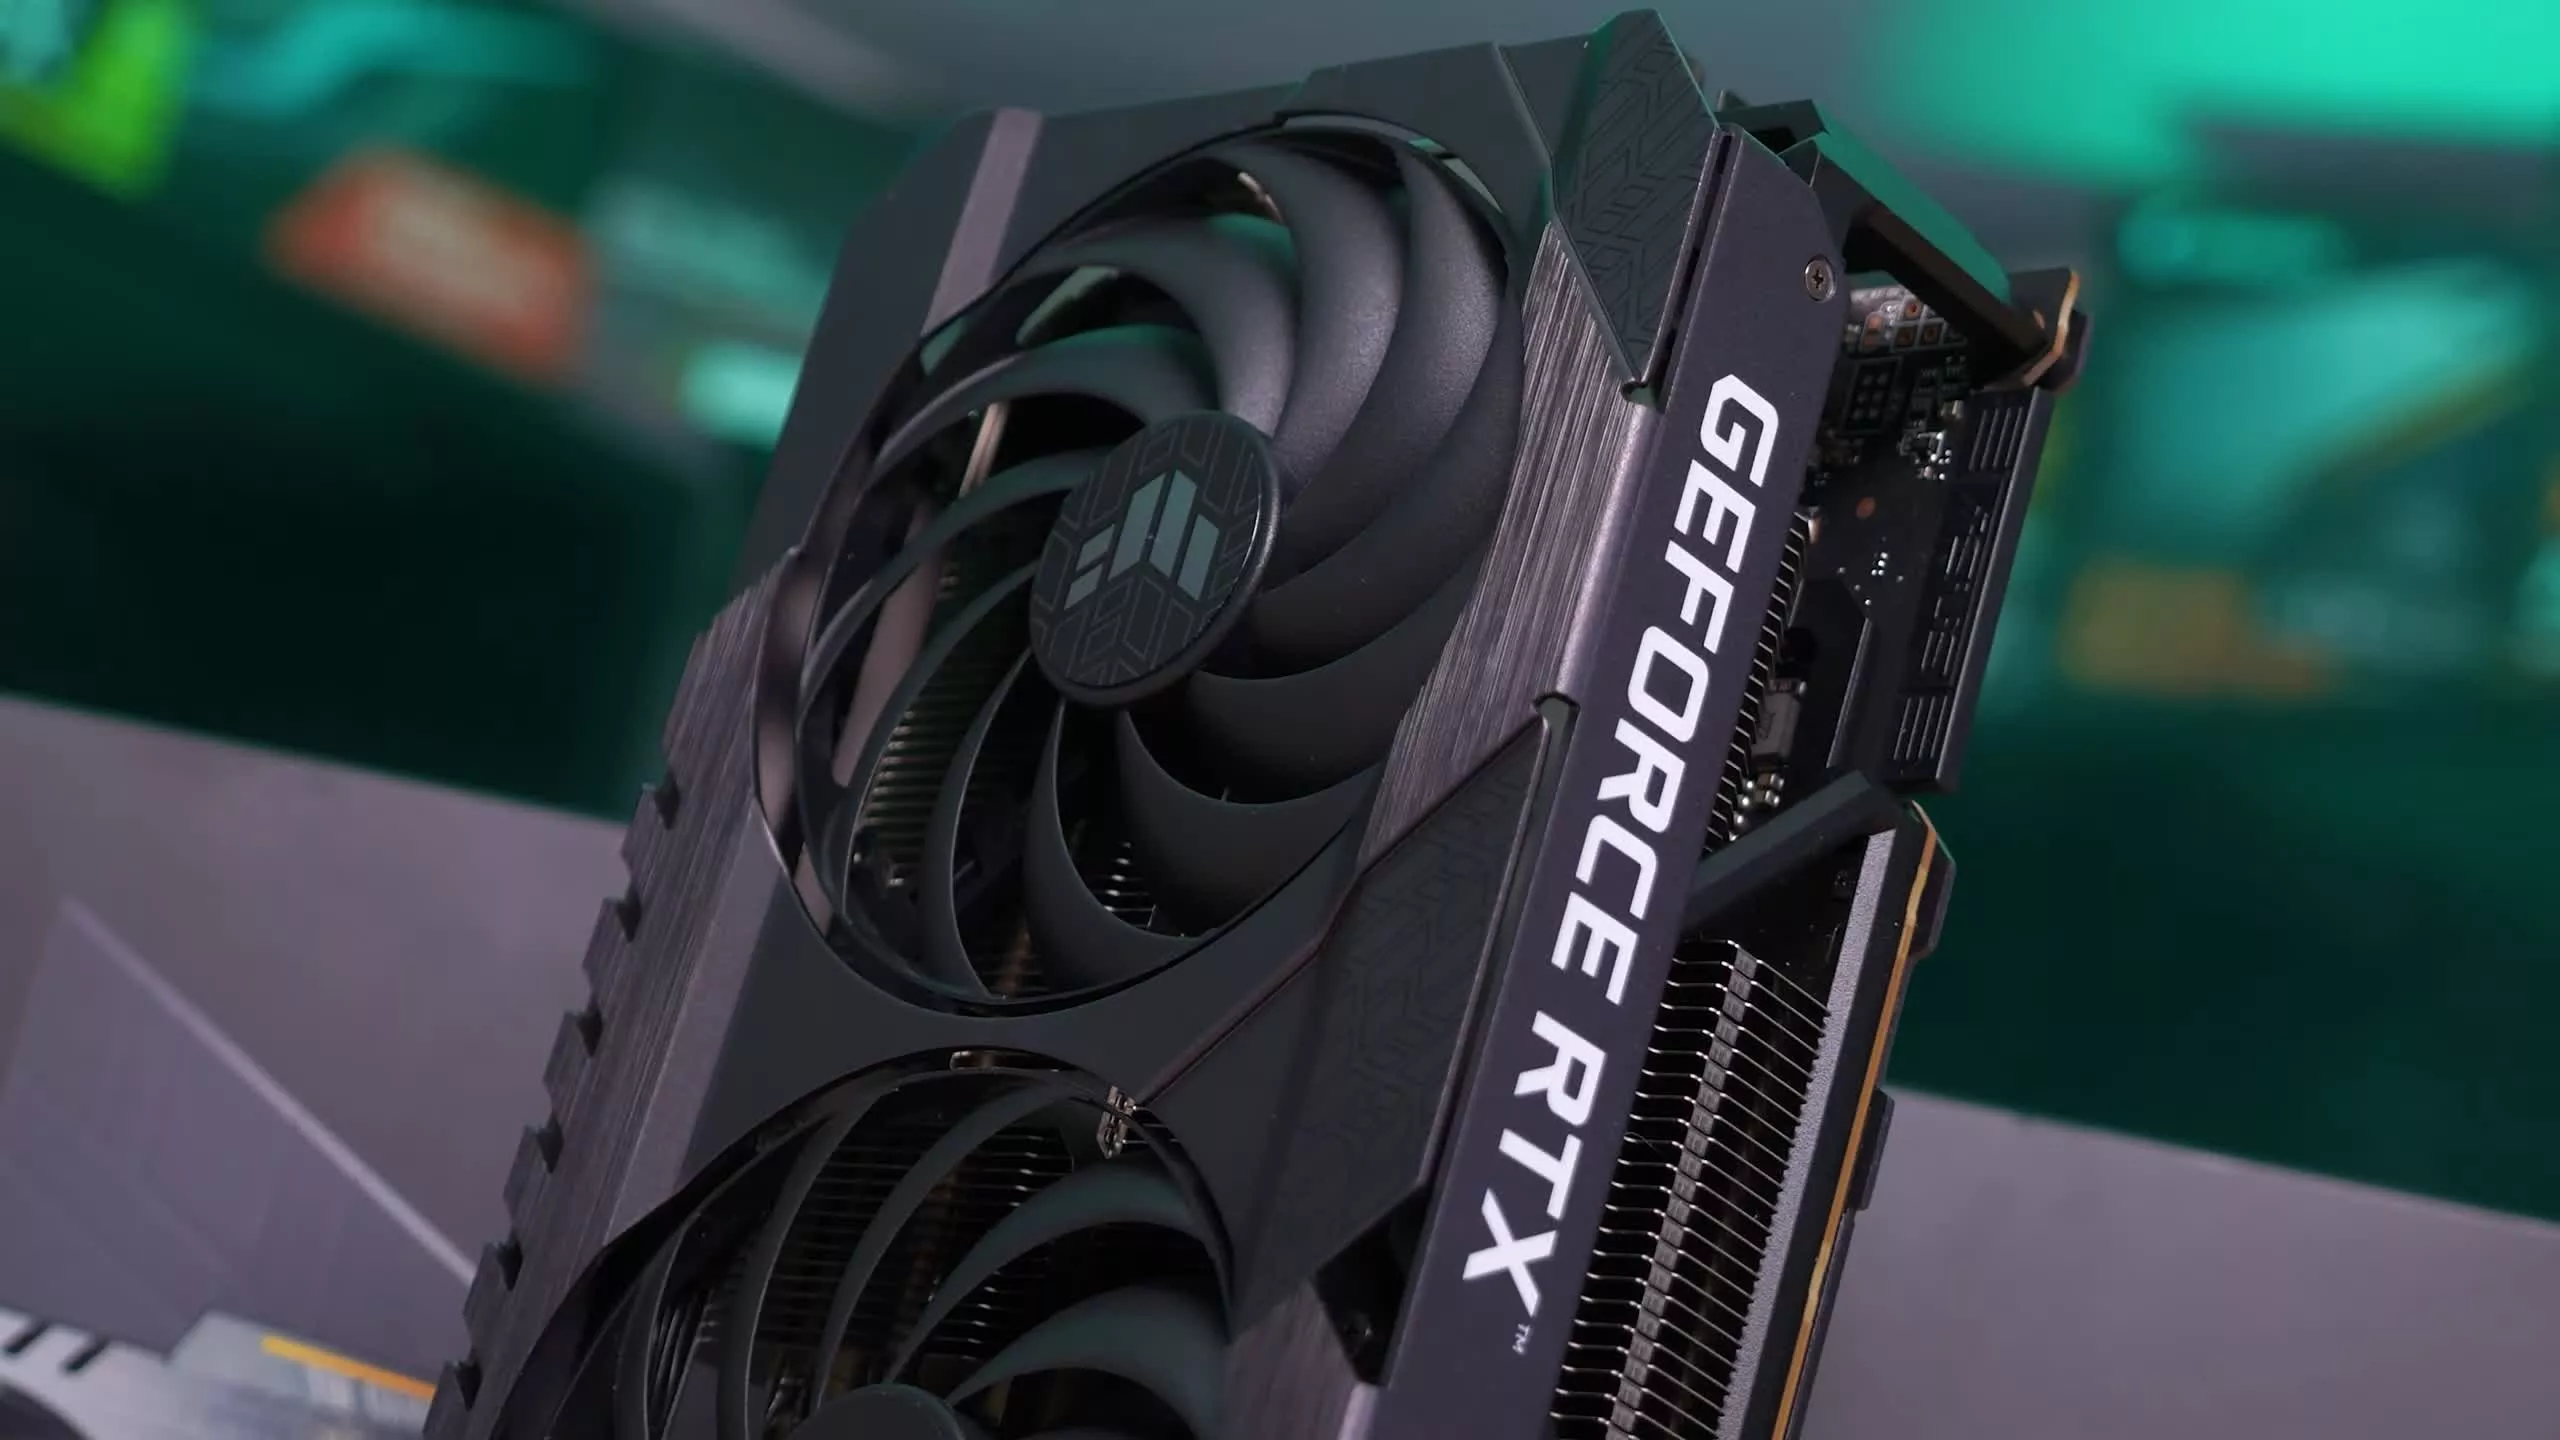 Nvidia's GeForce RTX 3090 Ti